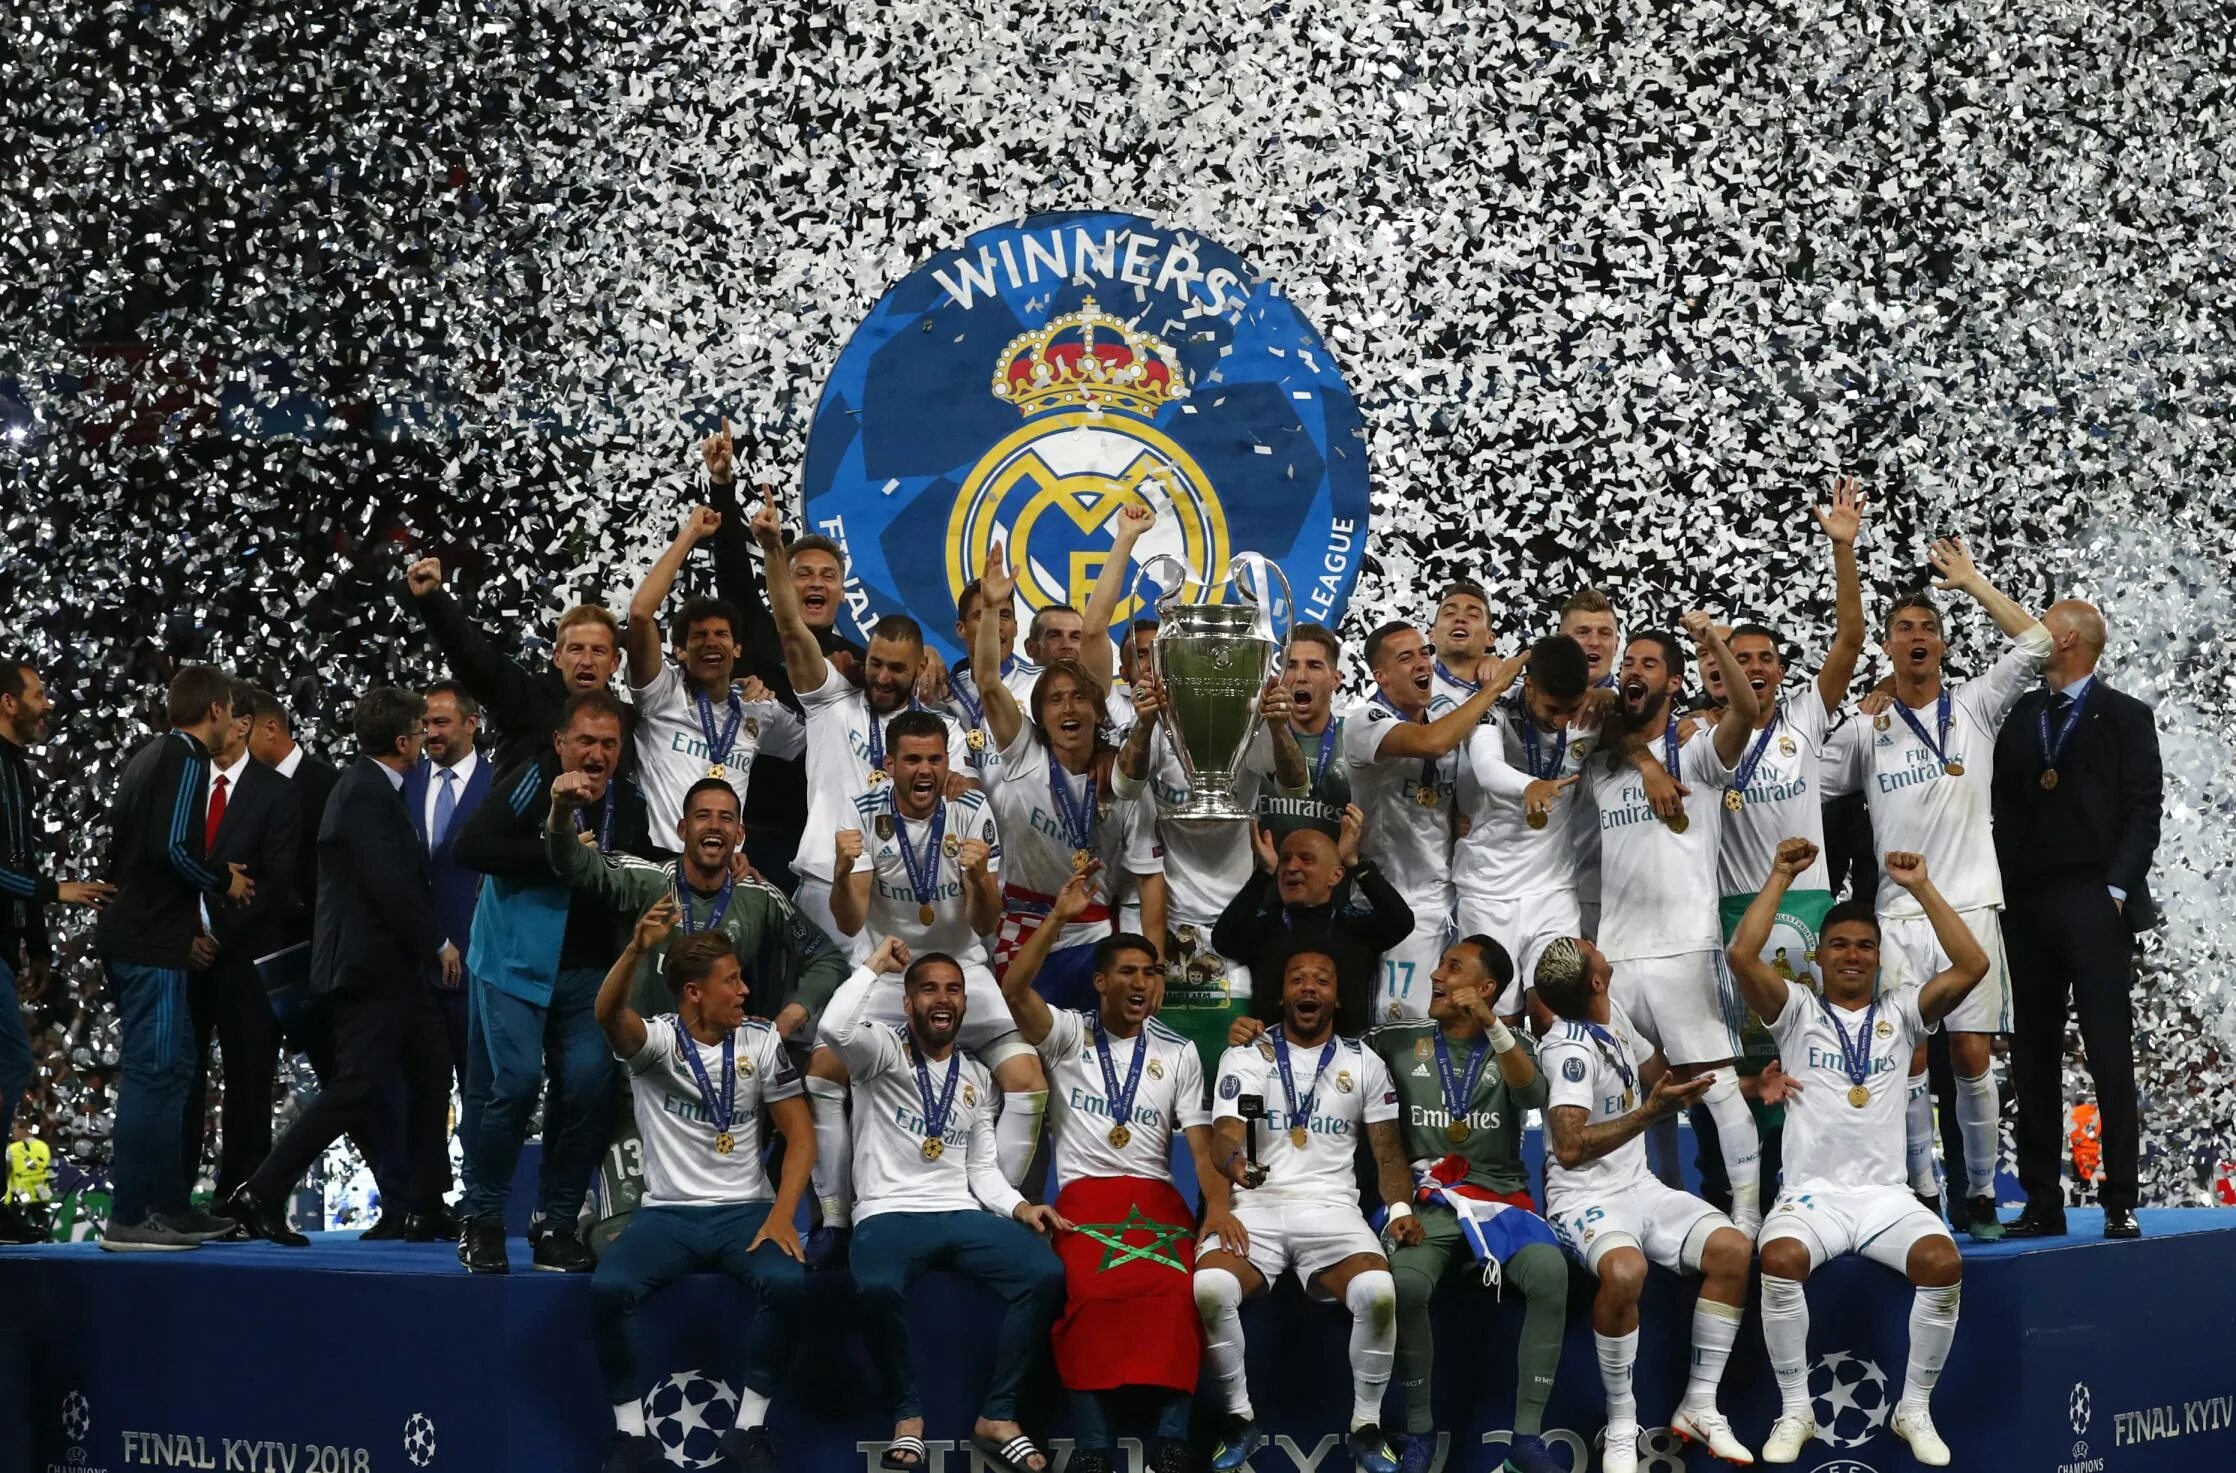 Uefa finals. Реал Мадрид финал Лиги чемпионов 2018. Htfk vflhbl abyfk KX. Реал Мадрид победитель Лиги чемпионов 2017. Реал Мадрид победитель Лиги чемпионов 2018.